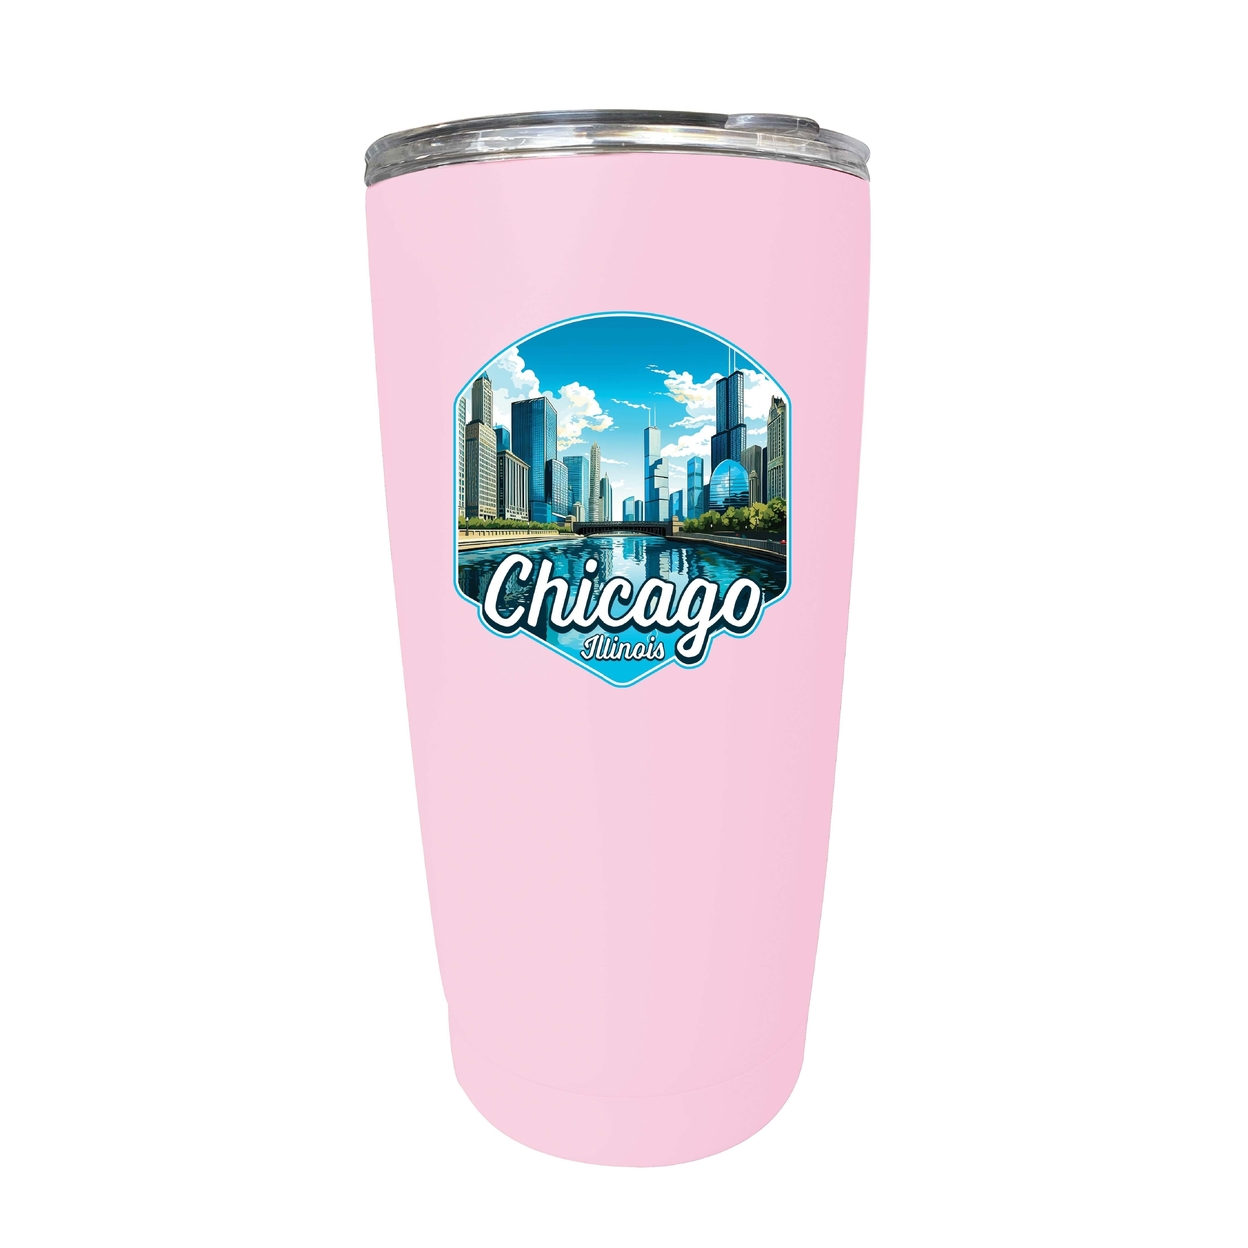 Chicago Illinois A Souvenir 16 Oz Insulated Tumbler - Pink,,Single